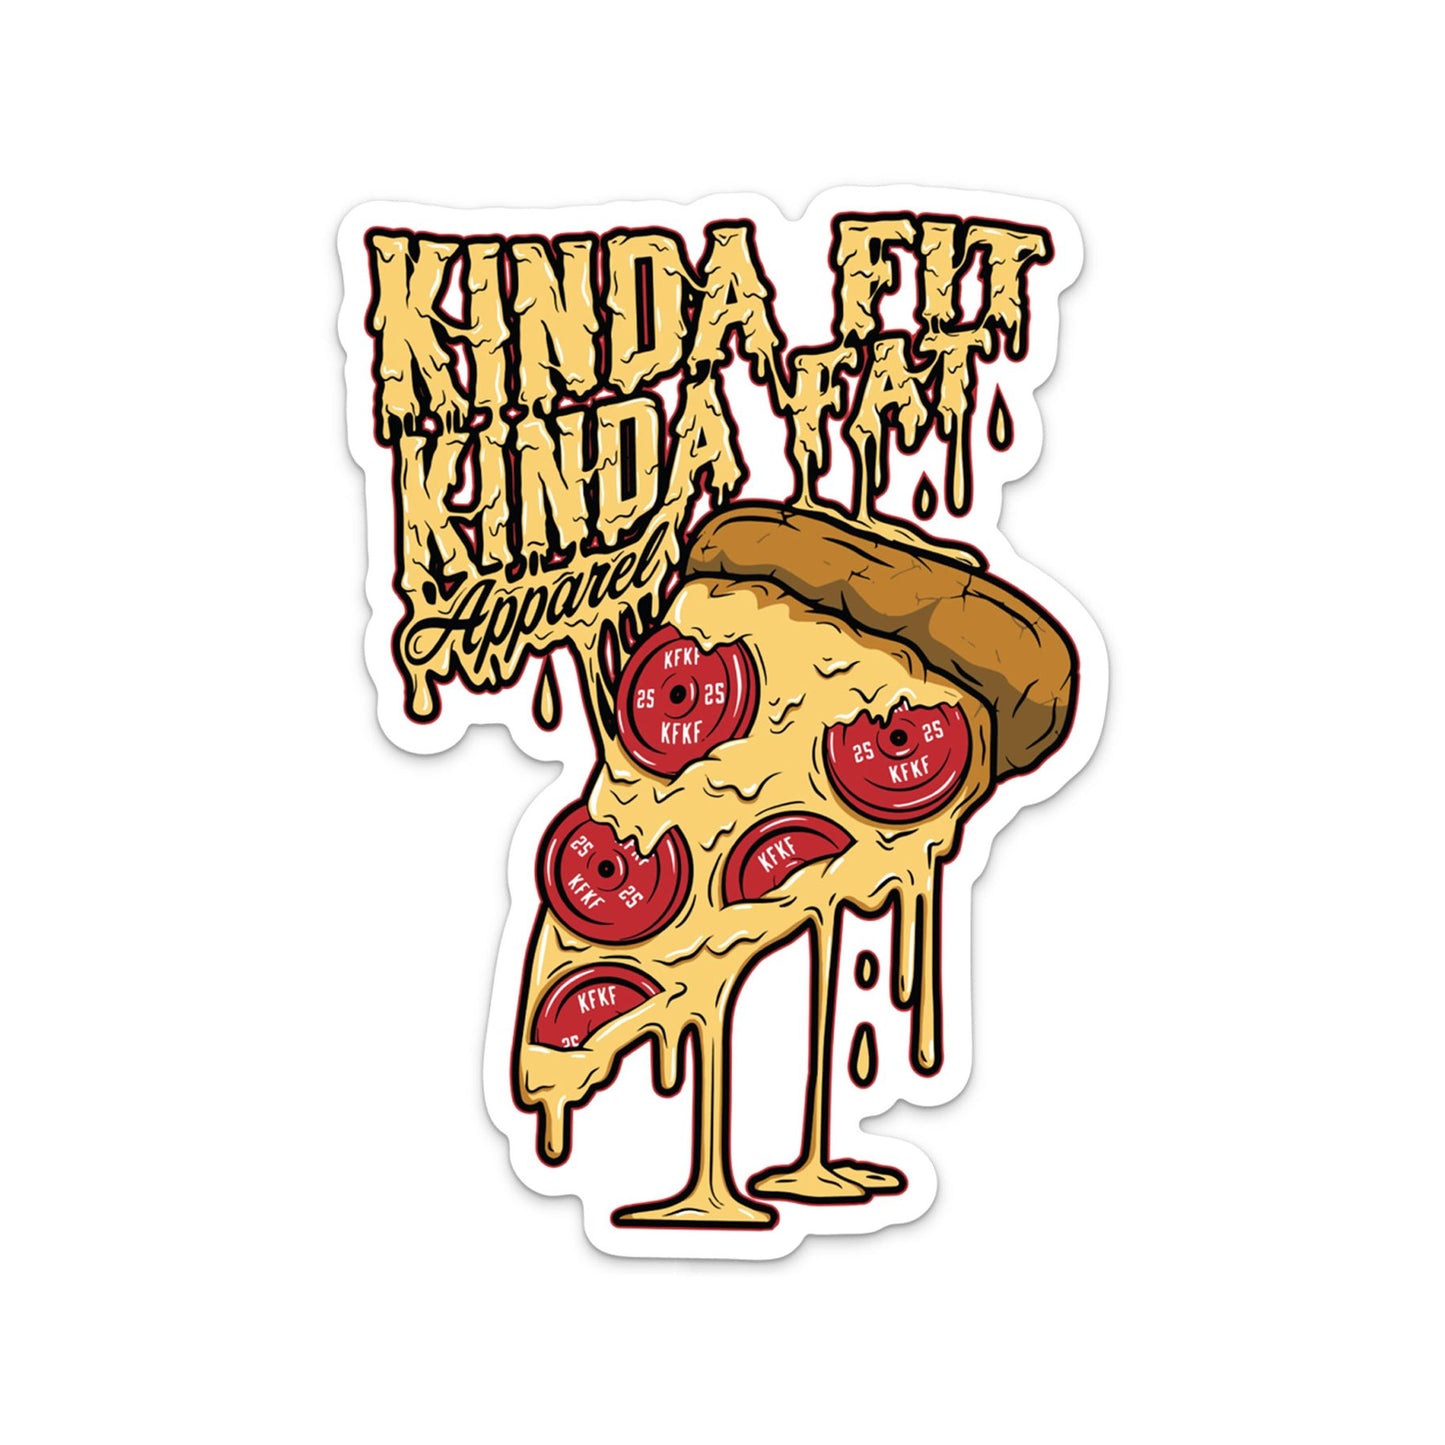 Kinda Fit Kinda Fat "Plateroni" Pizza Sticker - 9 for 9